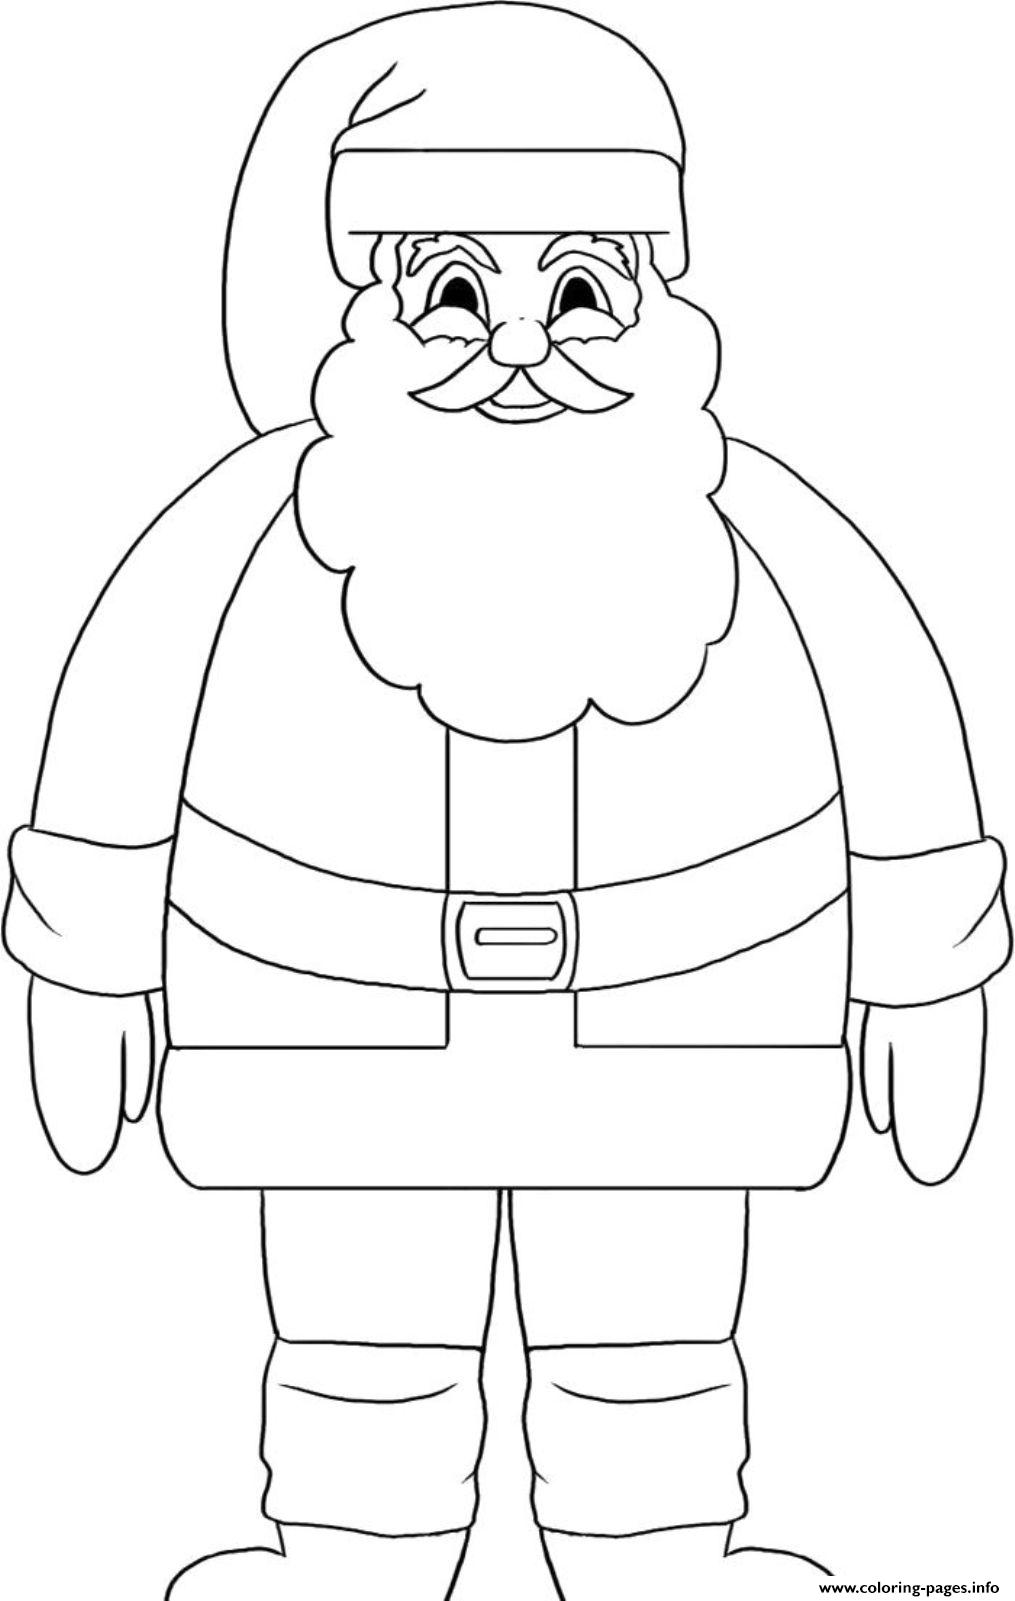 Stand Santa S For Kids Printable17c9 coloring